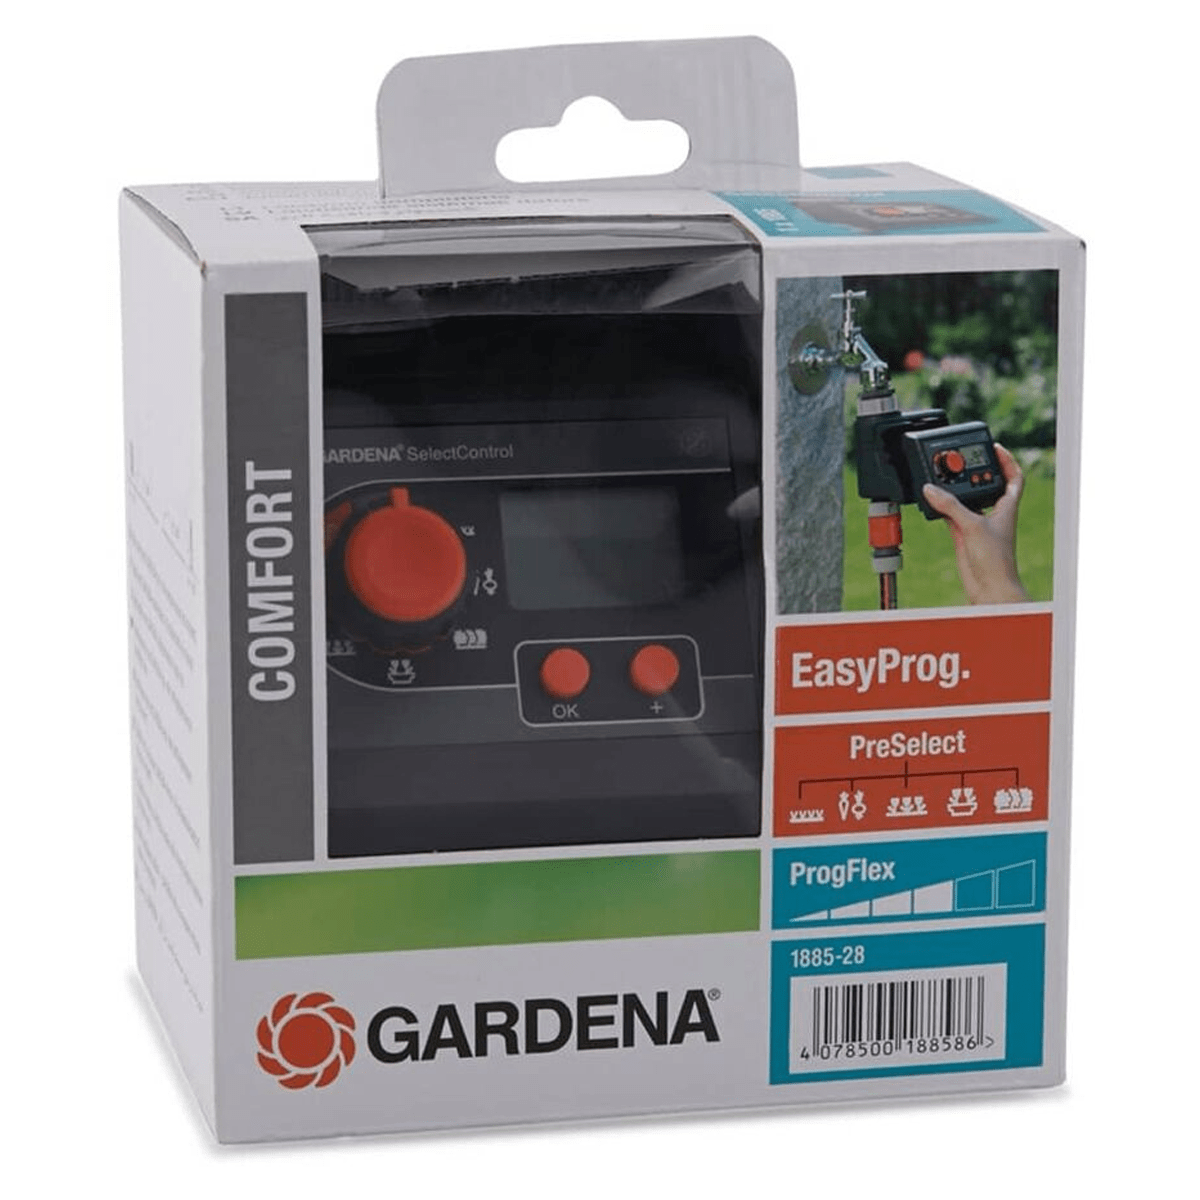 Gardena Water Computer Select Control